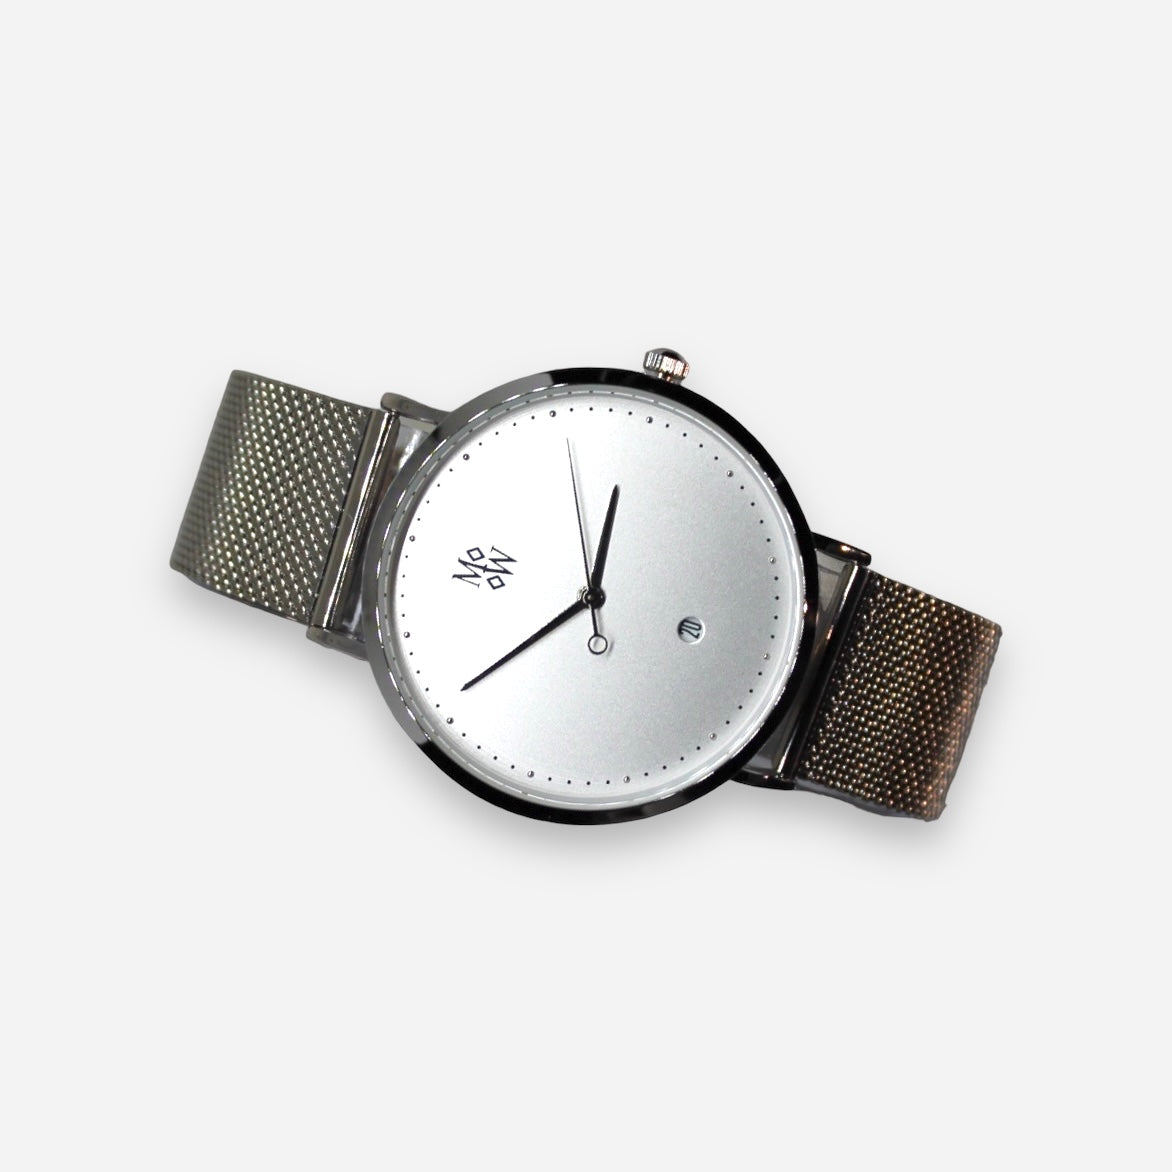 Forte Silver & White - The Mobilio Watch Company